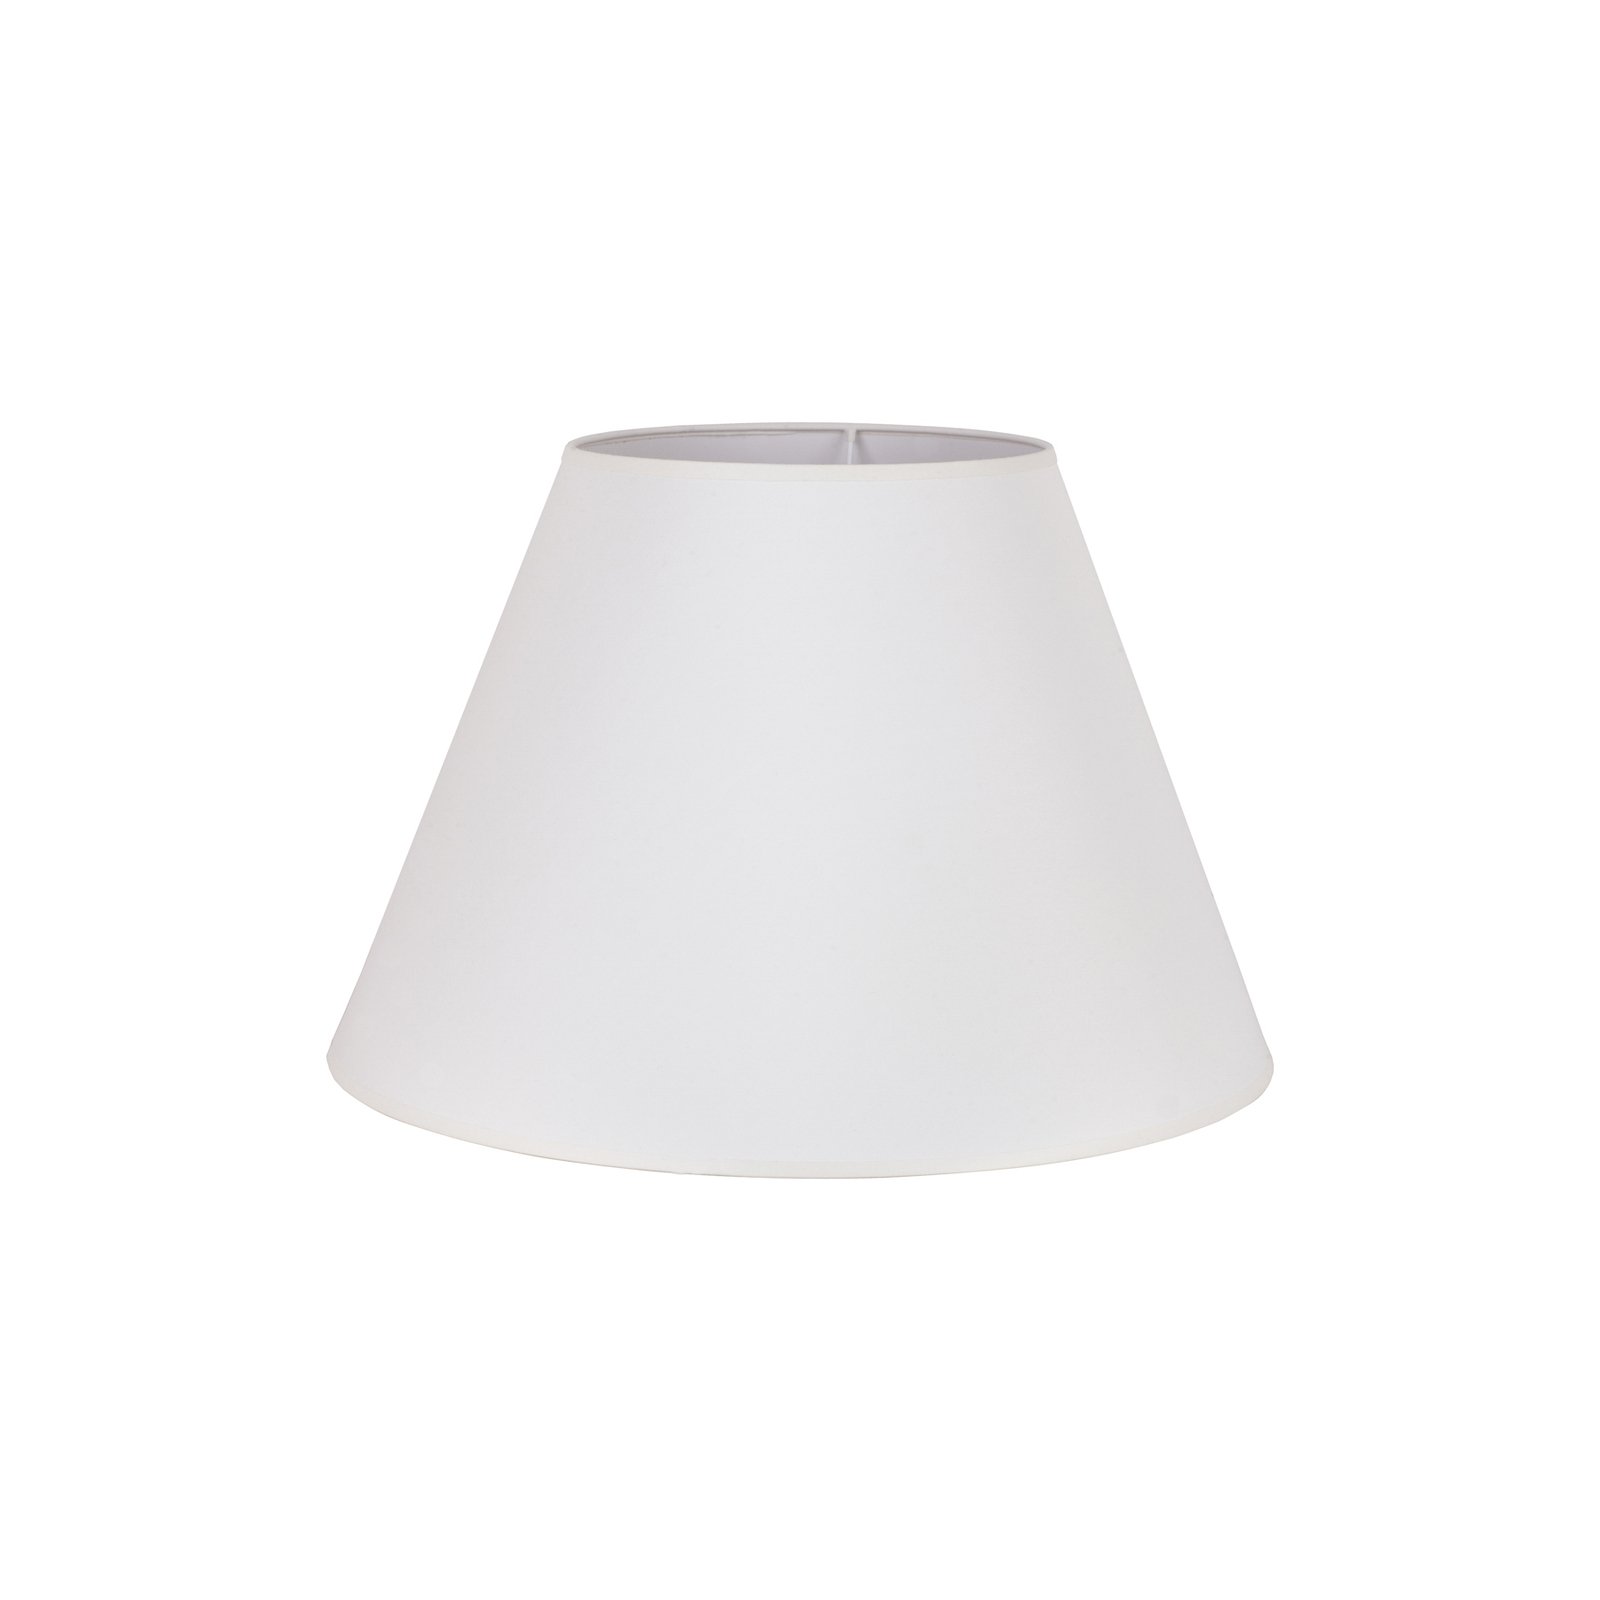 Sofia lampshade height 26 cm, ecru/white | Lights.co.uk